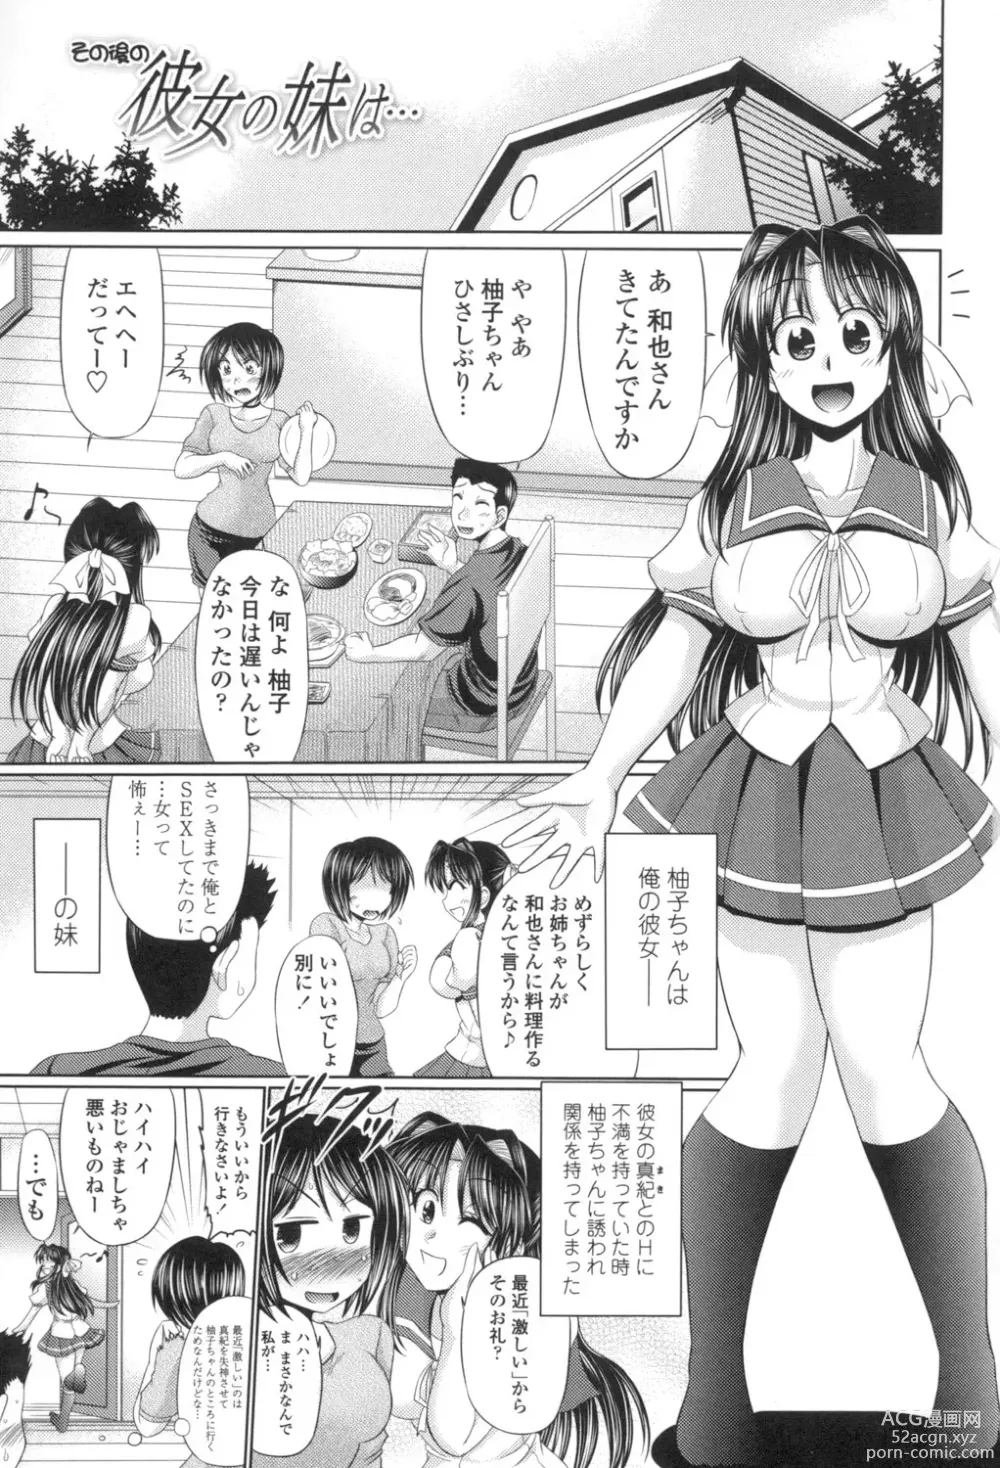 Page 6 of manga Otome Gokoro